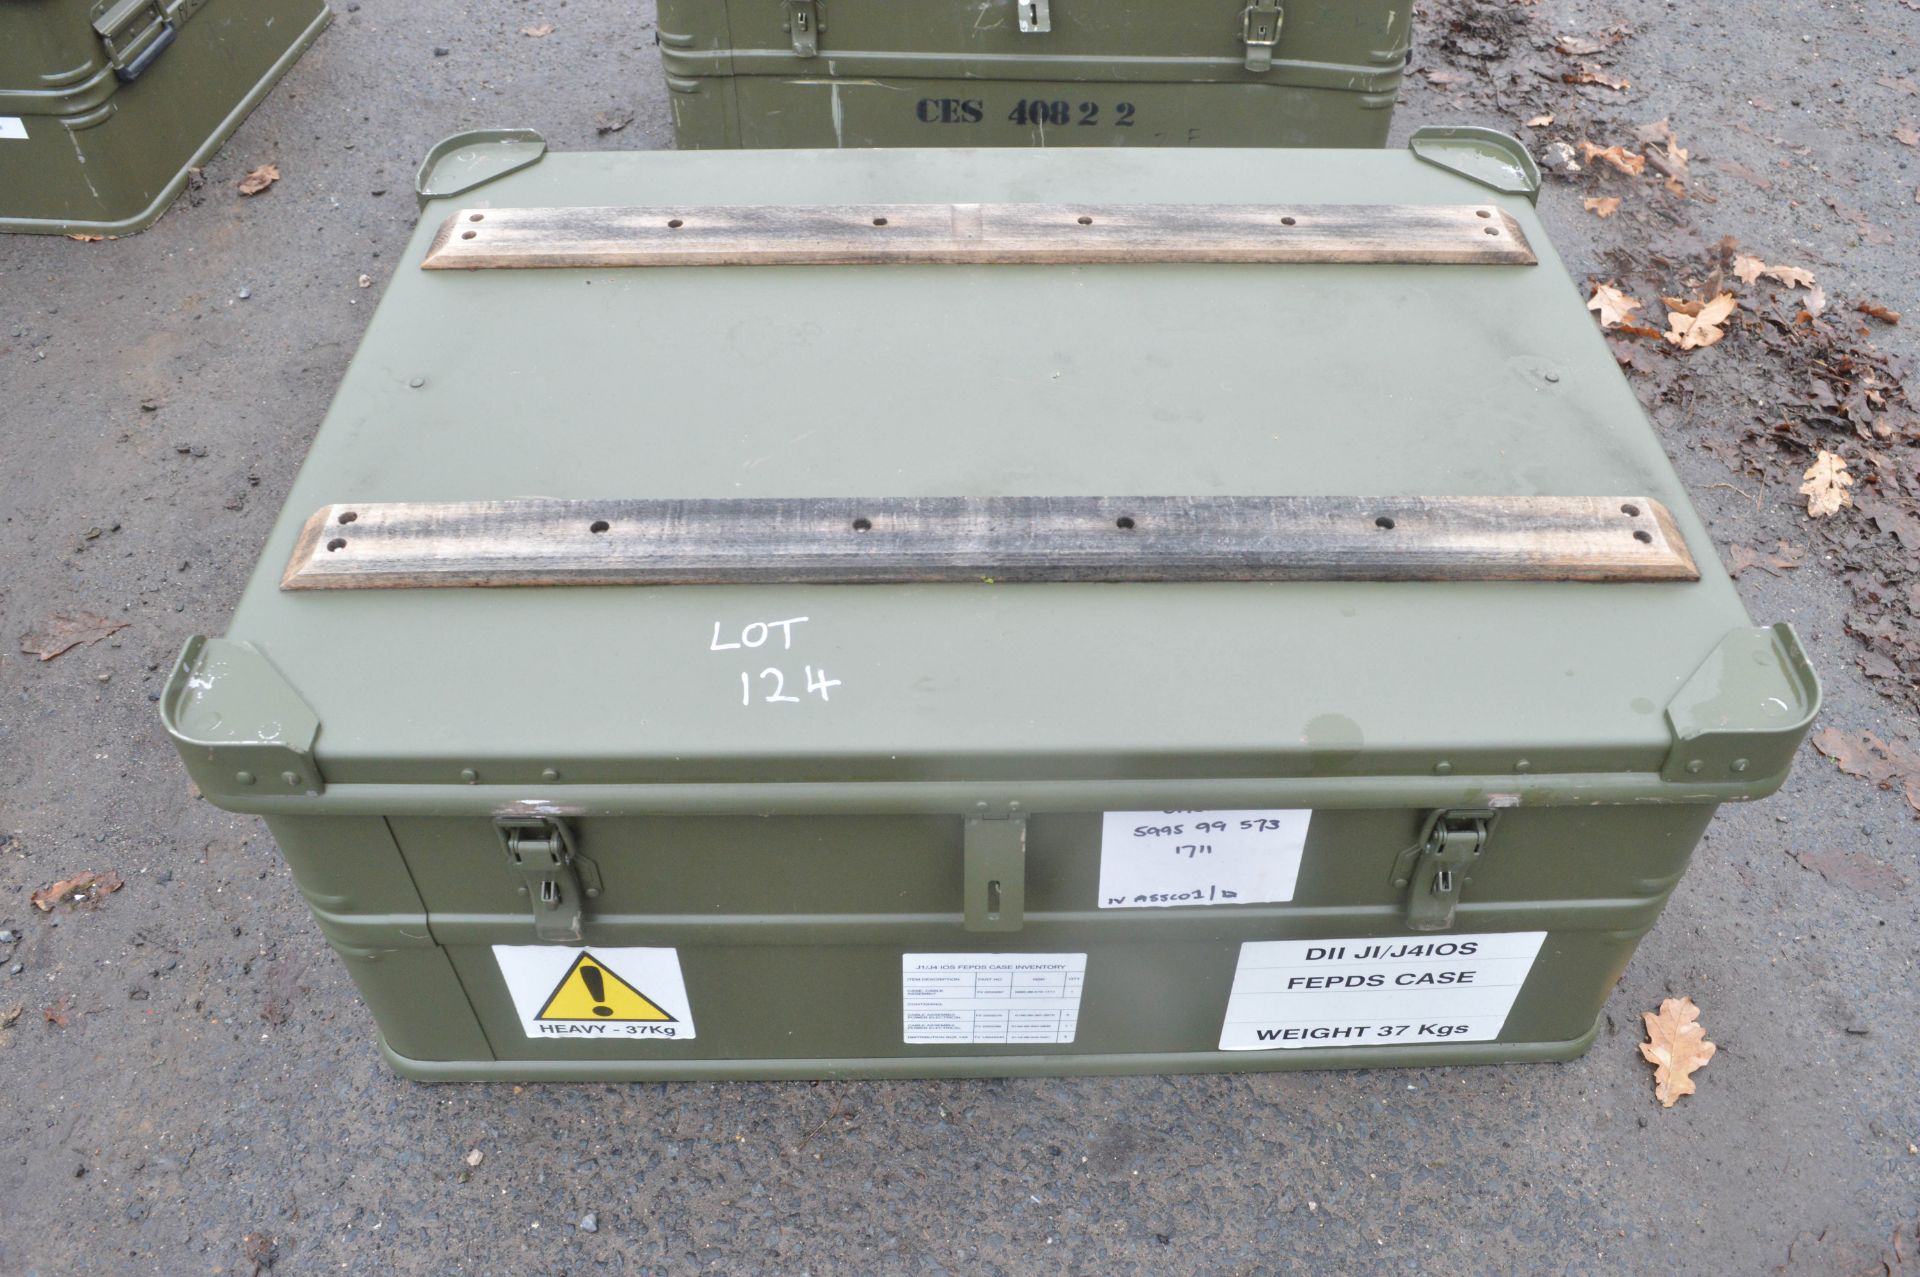 Zarges Aluminium shipping box (Ex MOD) Dimensions: 77cm L x 57cm W x 30cm D